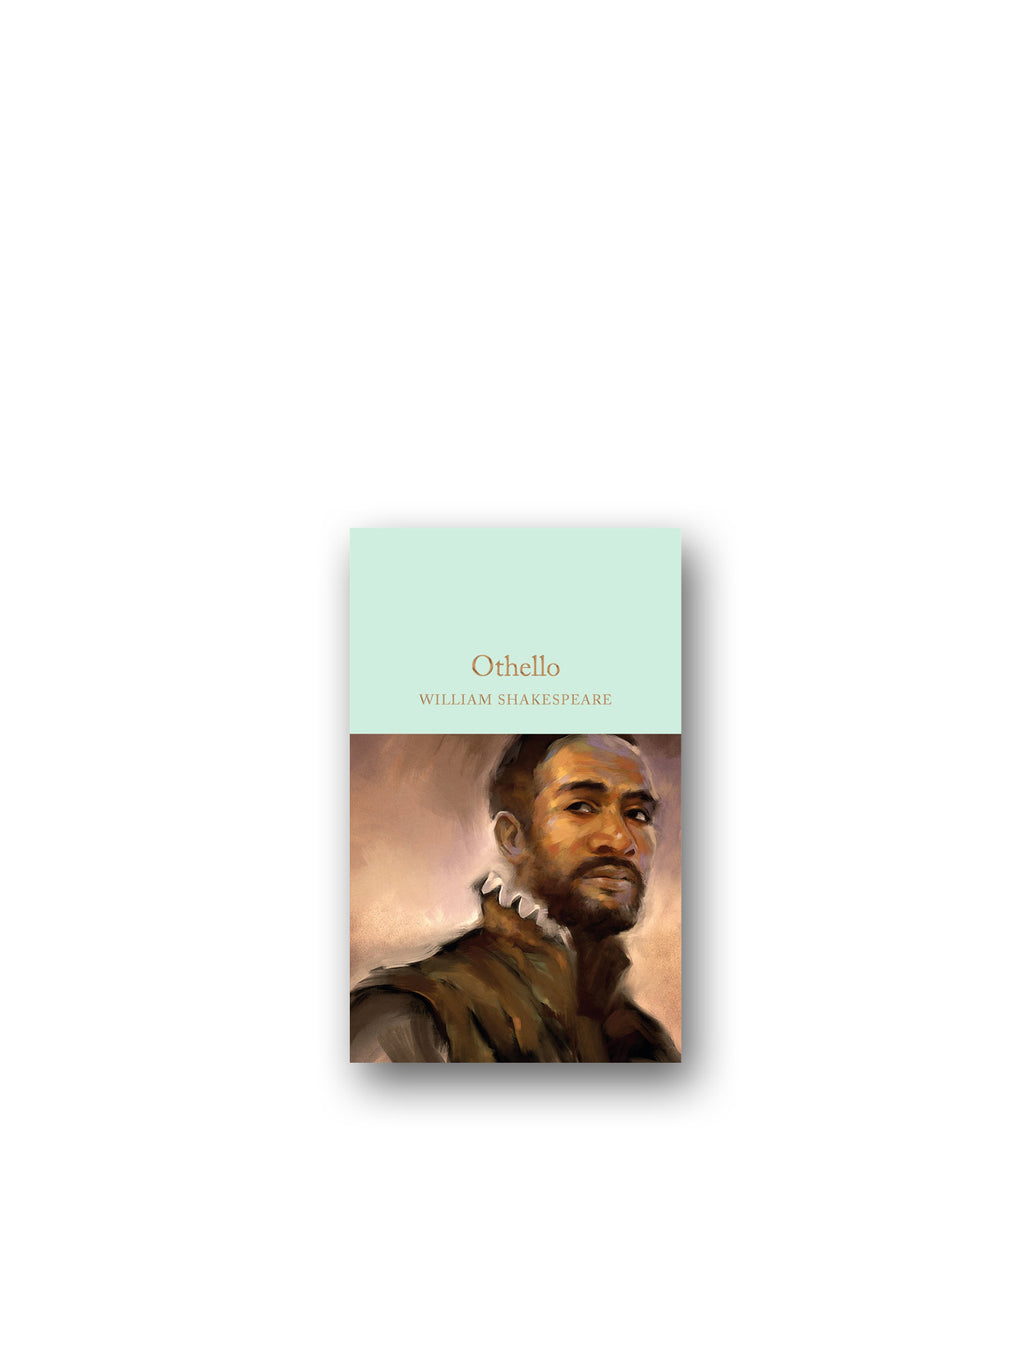 Othello : The Moor of Venice